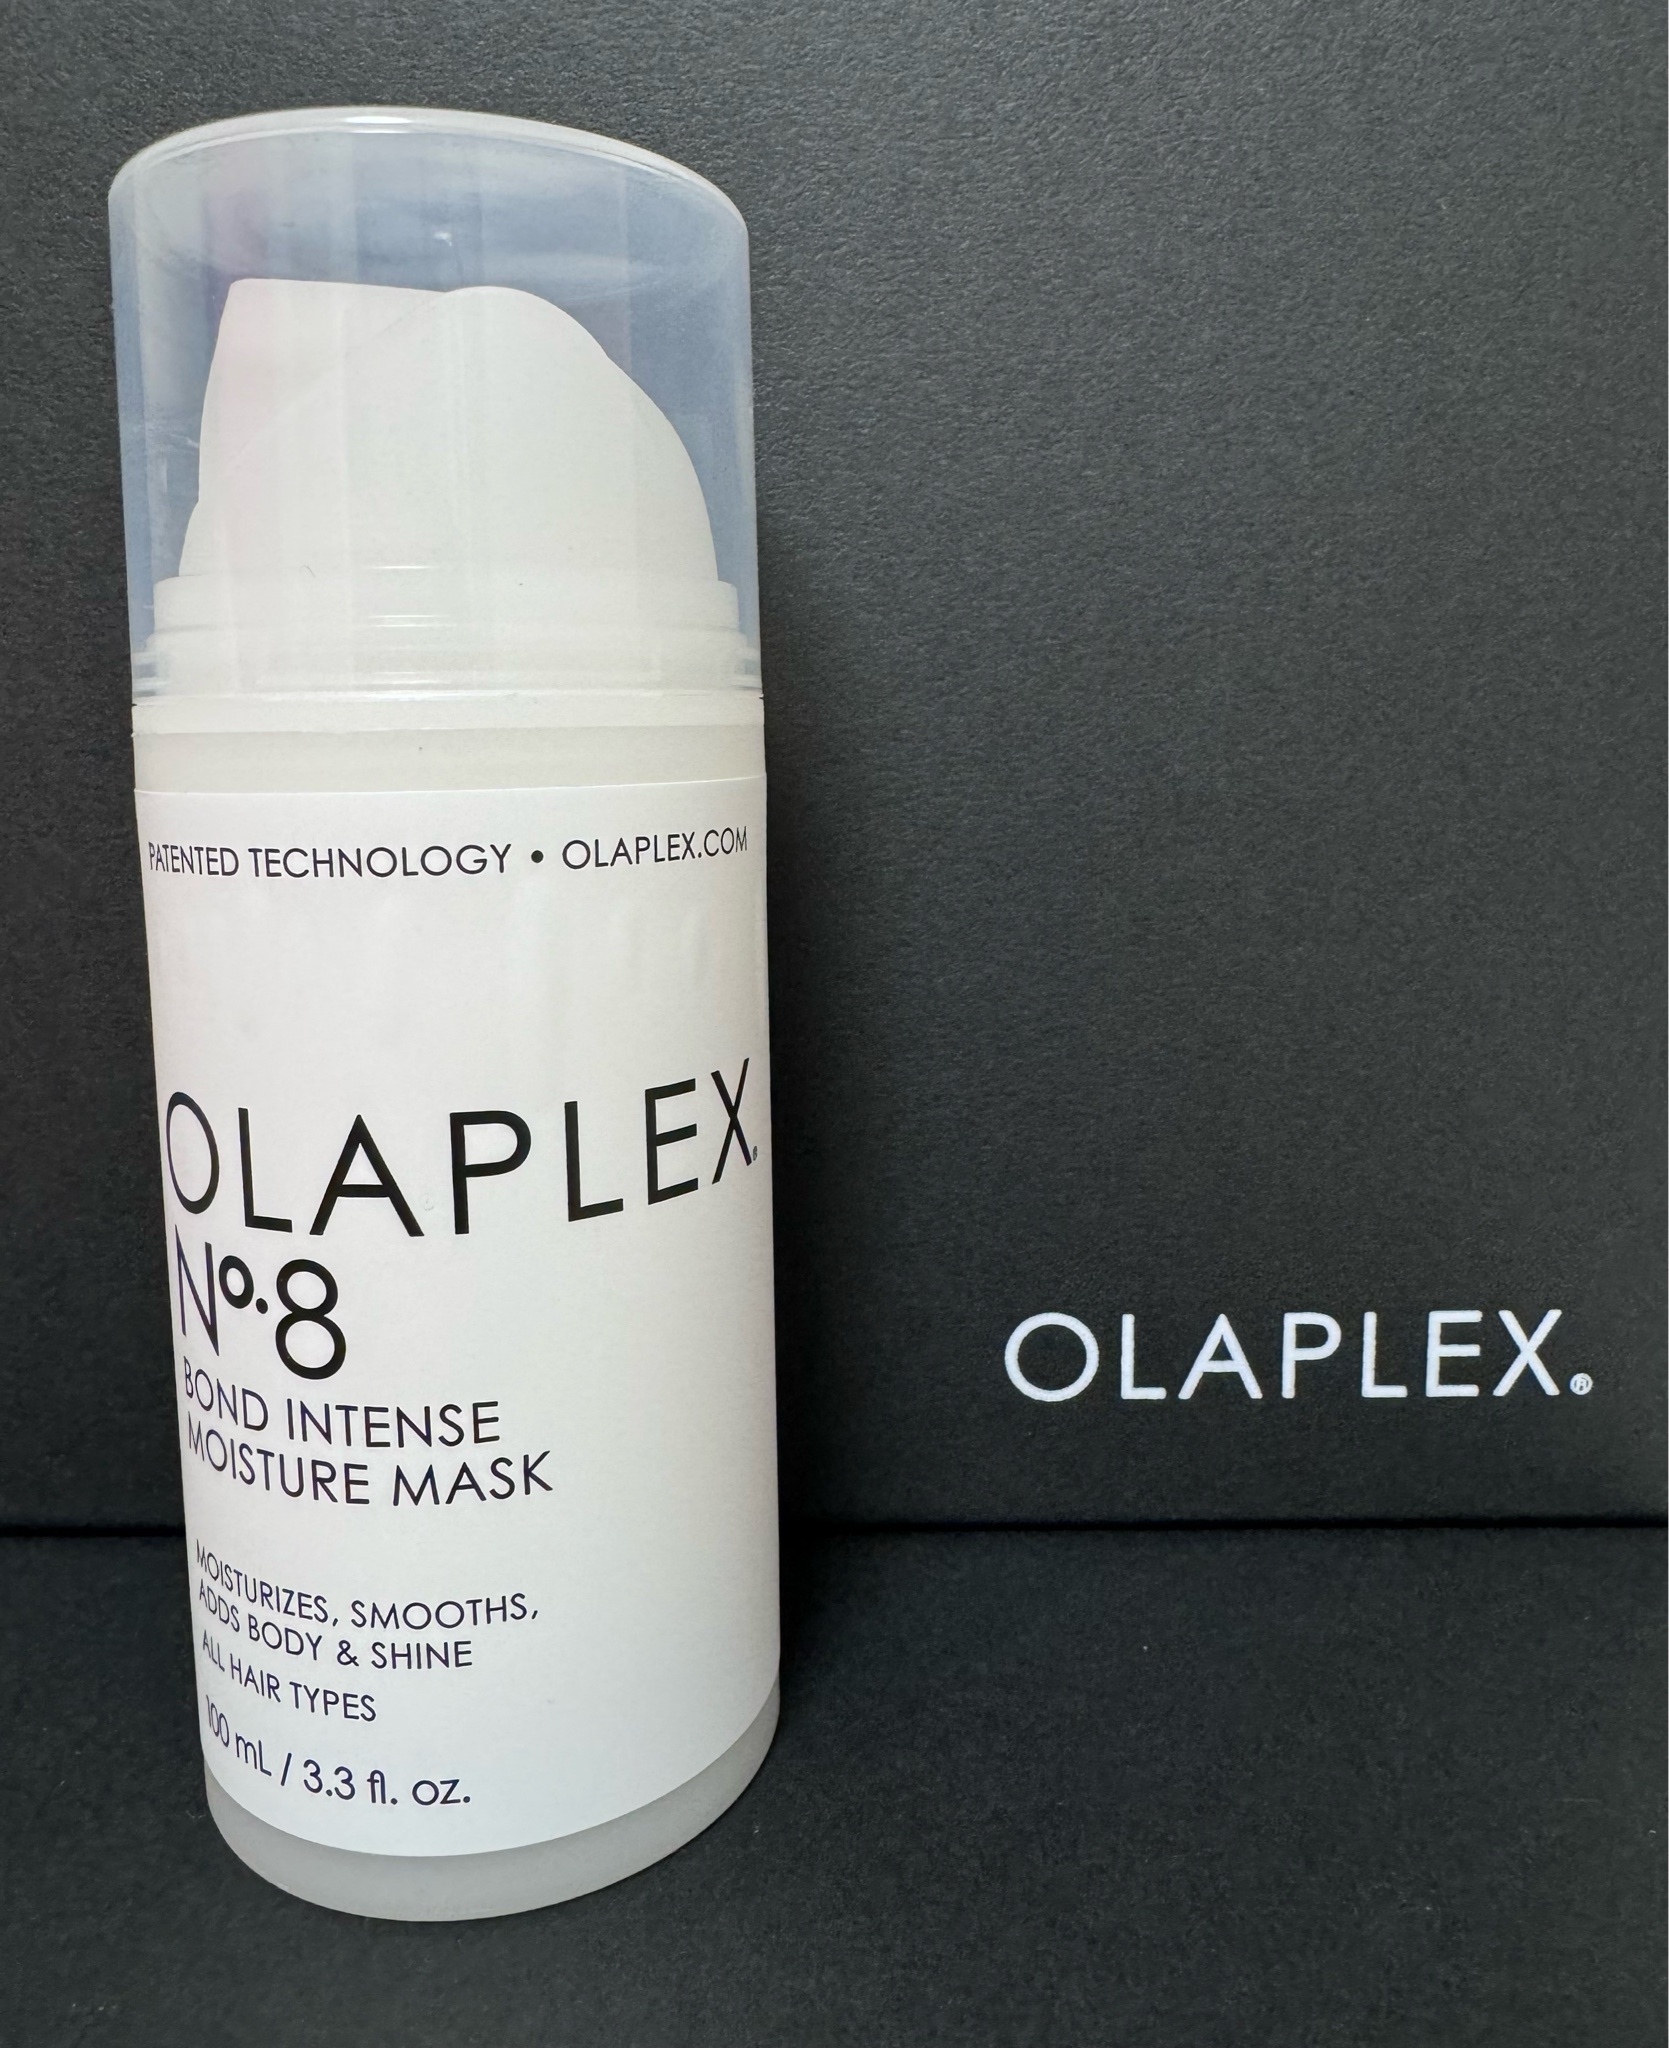 OLAPLEX(オラプレックス) / No.8 ボンドインテンス モイスチャーマスク 